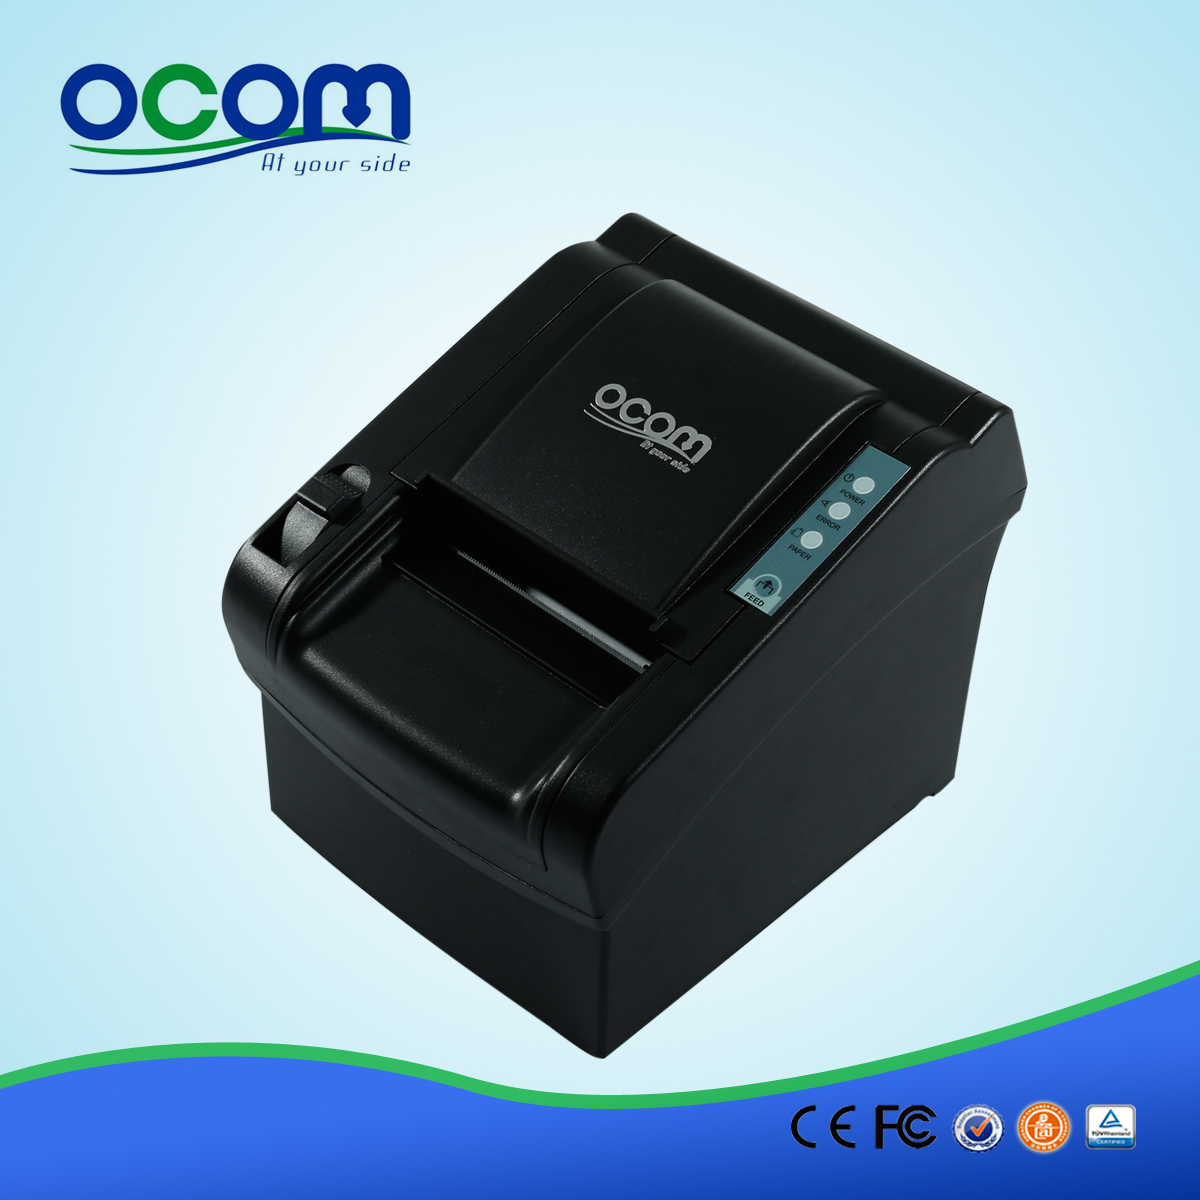 OCPP-802: levering pos thermische printer module, 80mm thermische bonprinter